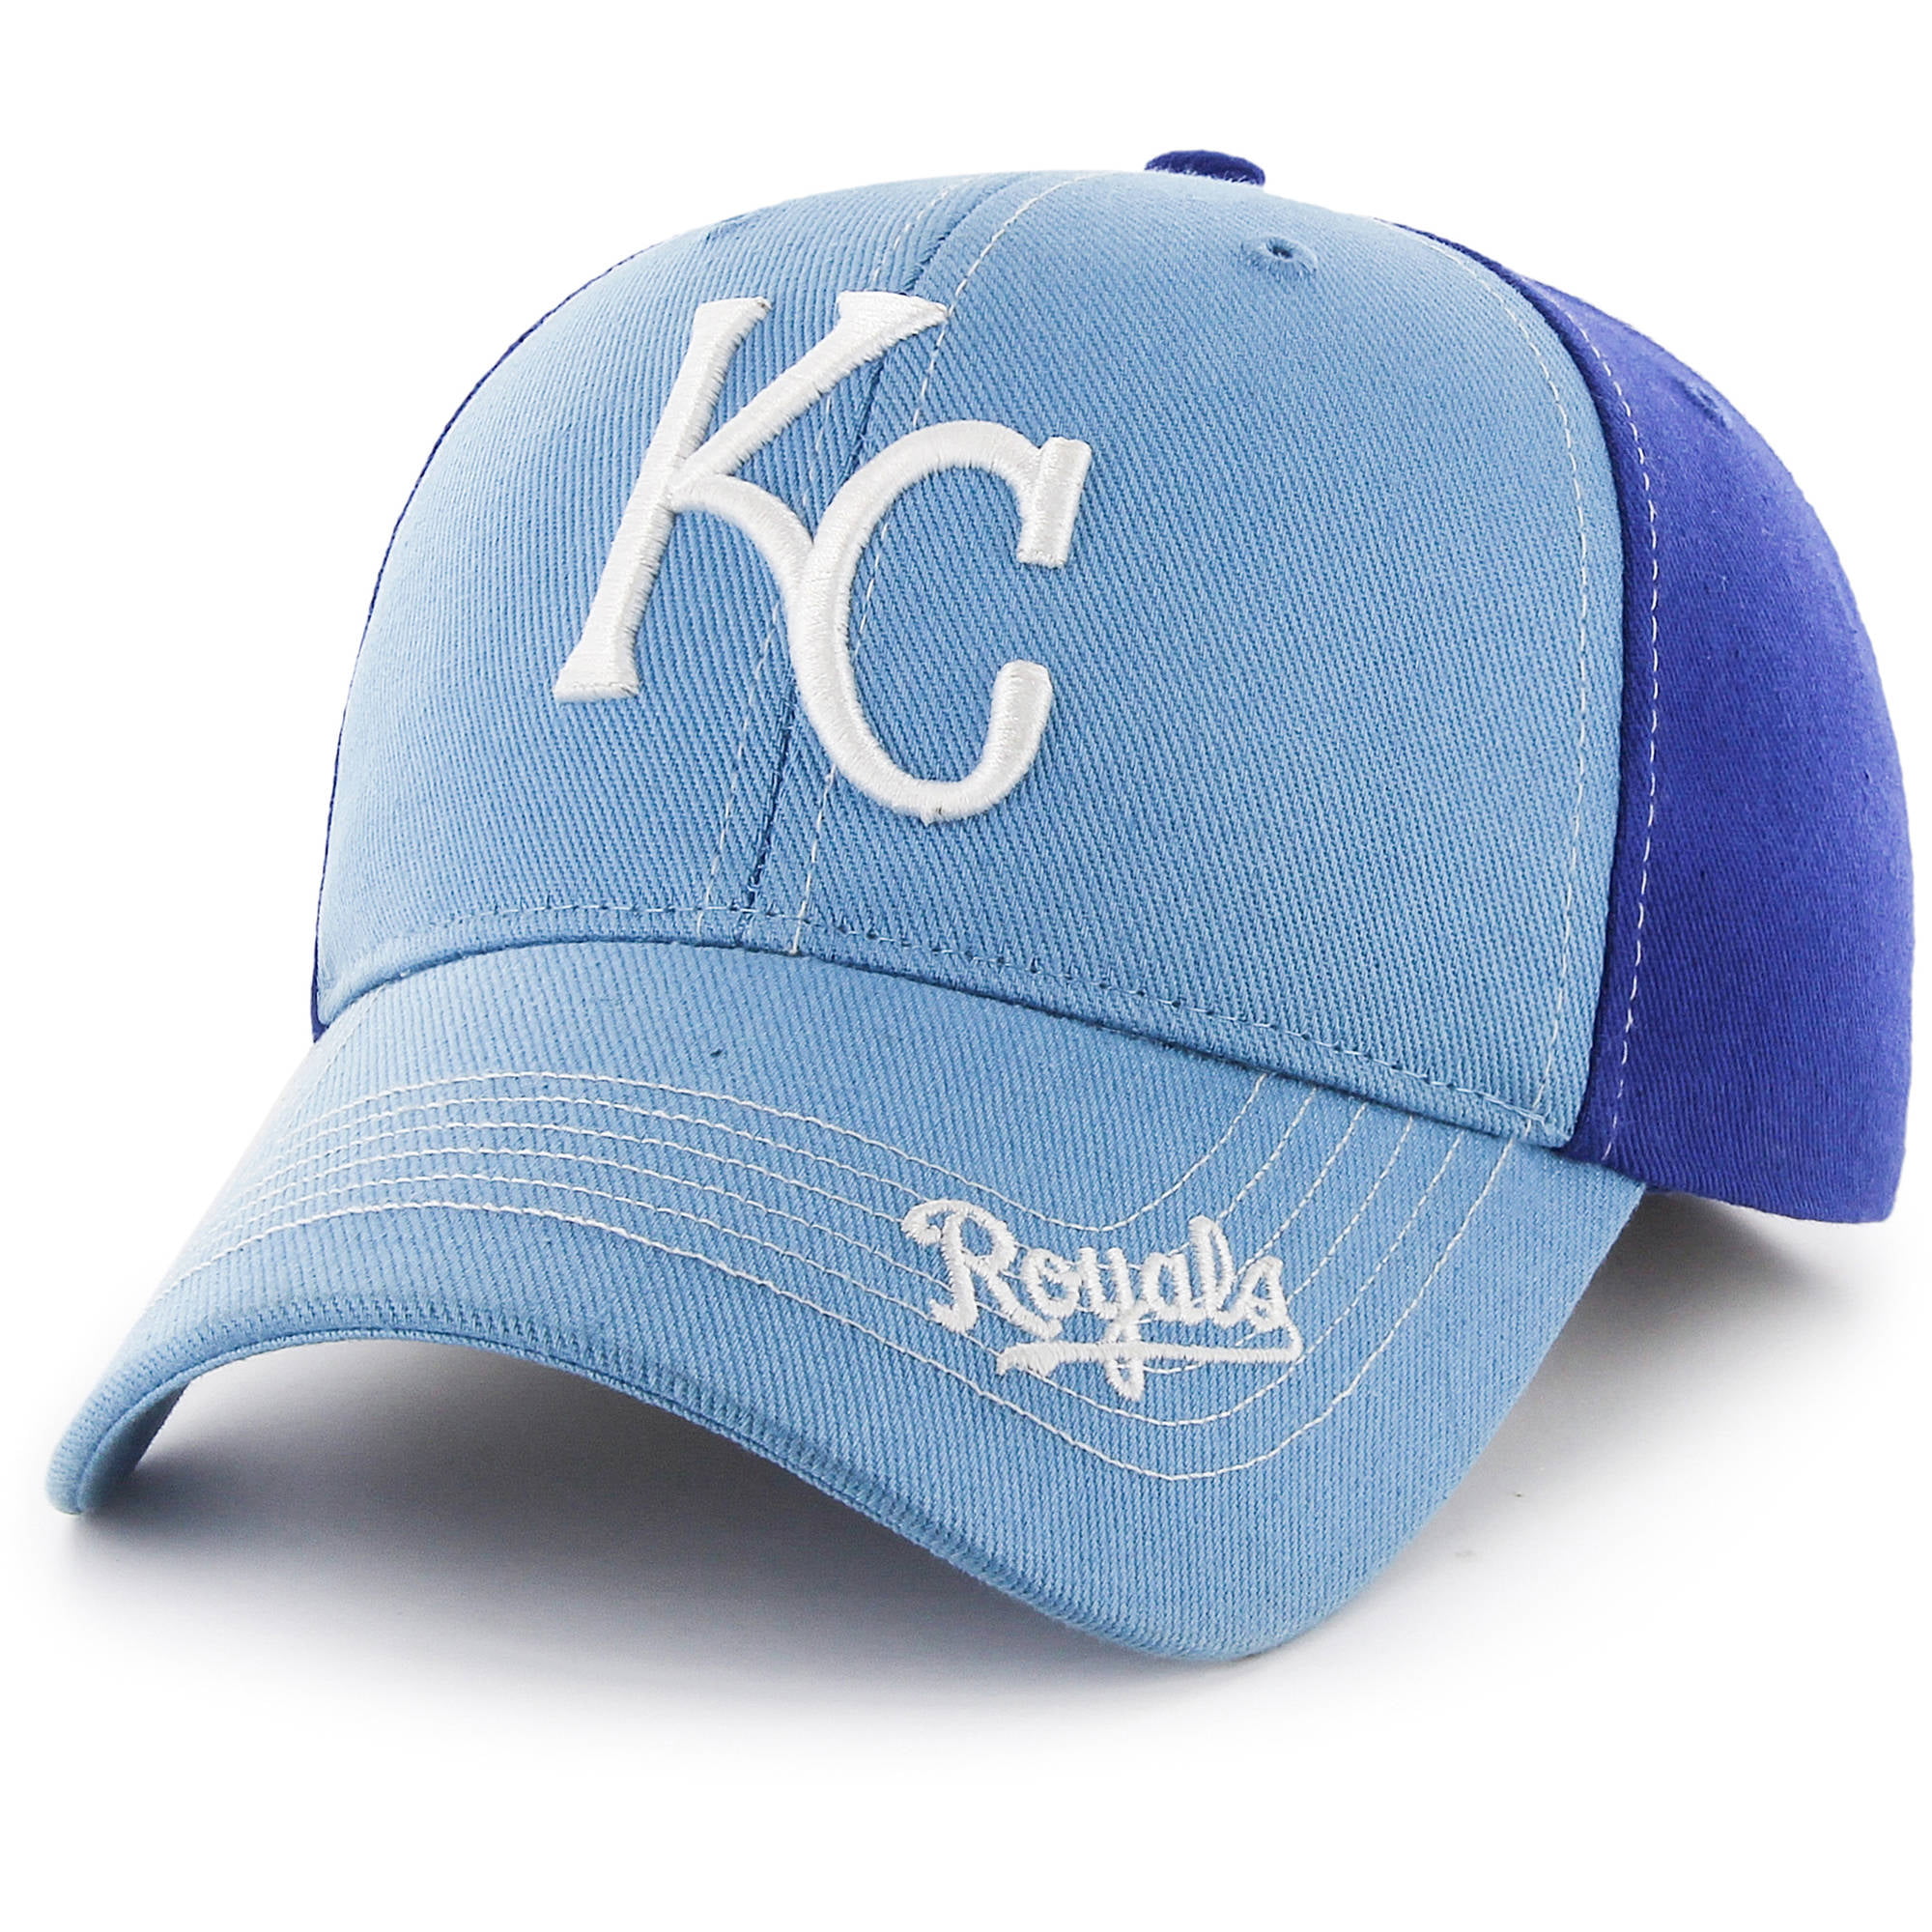 MLB Kansas City Royals Revolver Cap / Hat by Fan Favorite 